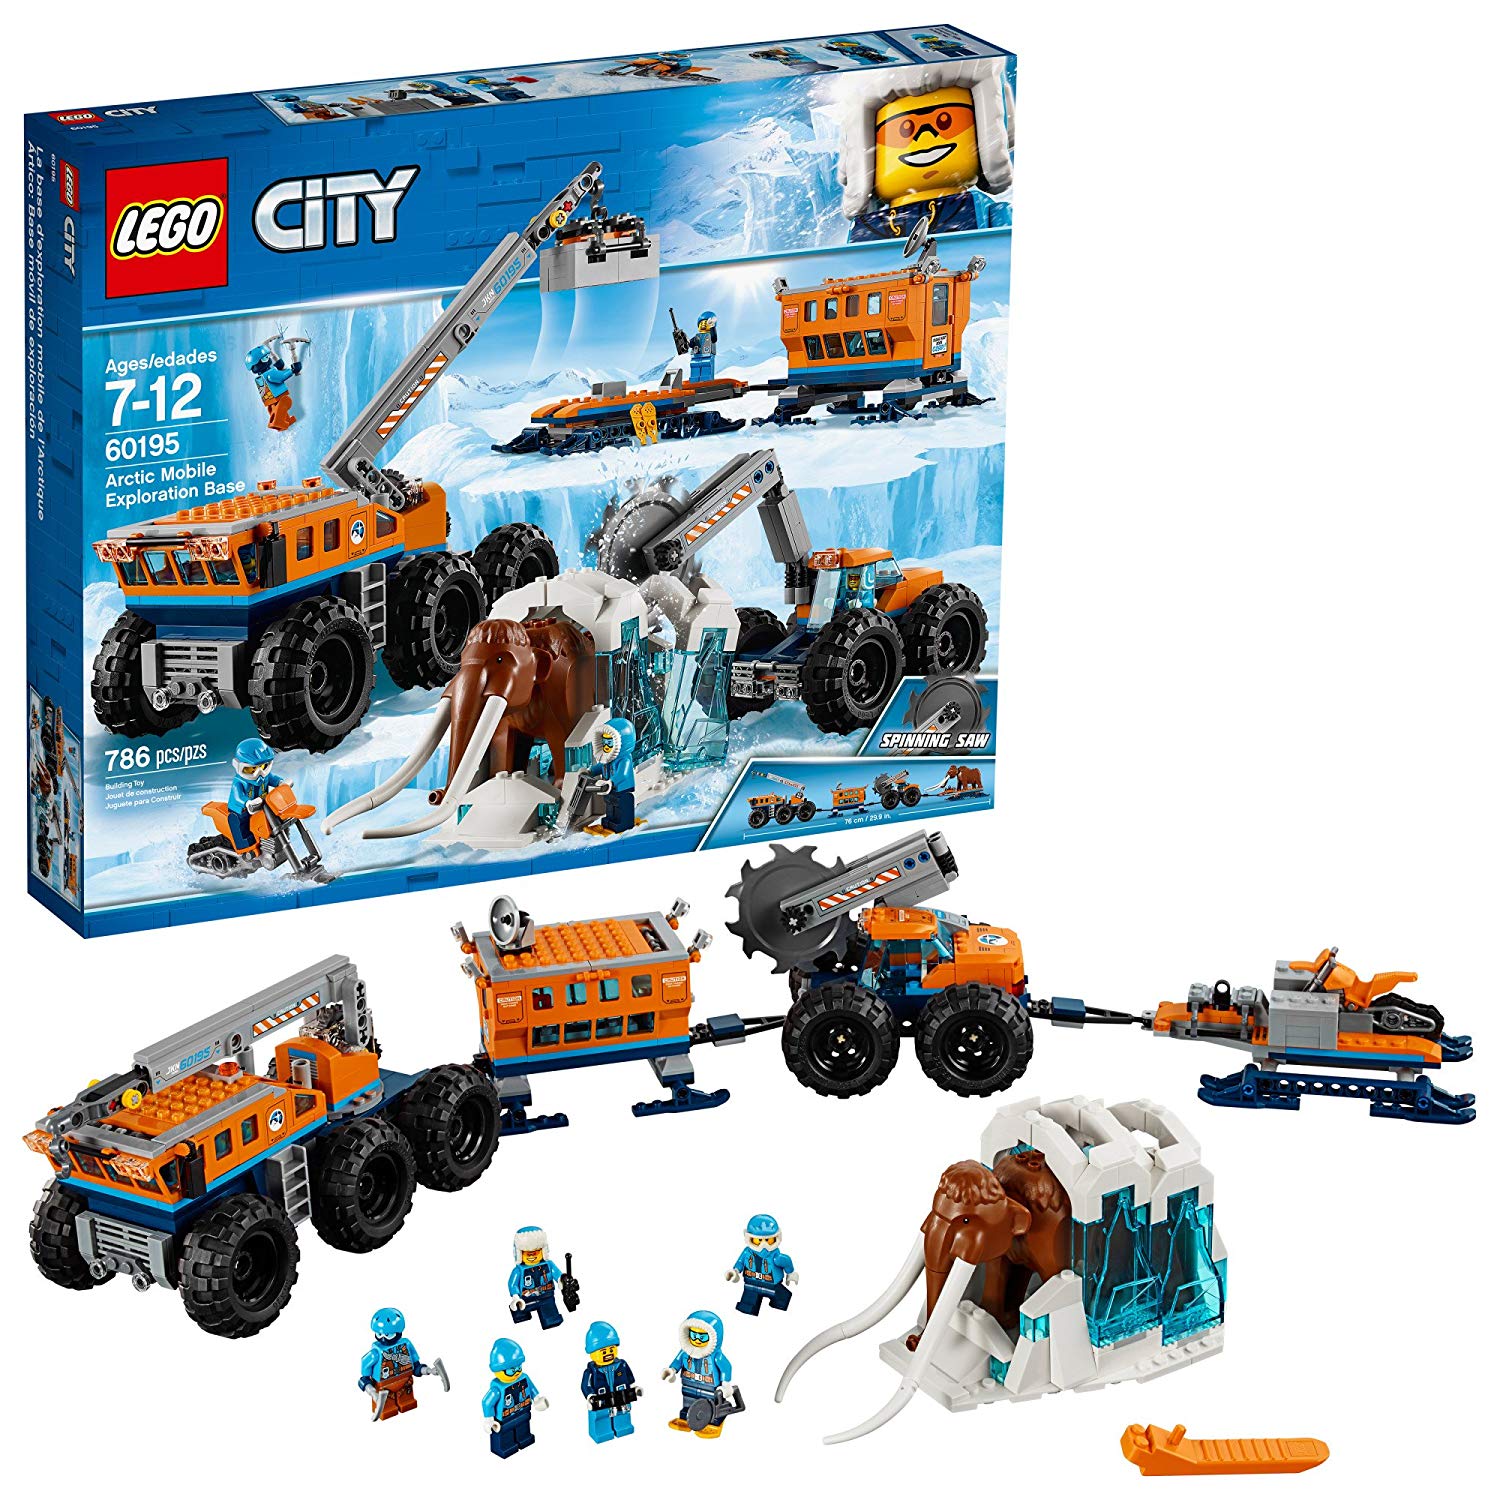 LEGO City Arctic Mobile Exploration Base Building Kit Only $79.99! (Reg $119.99)